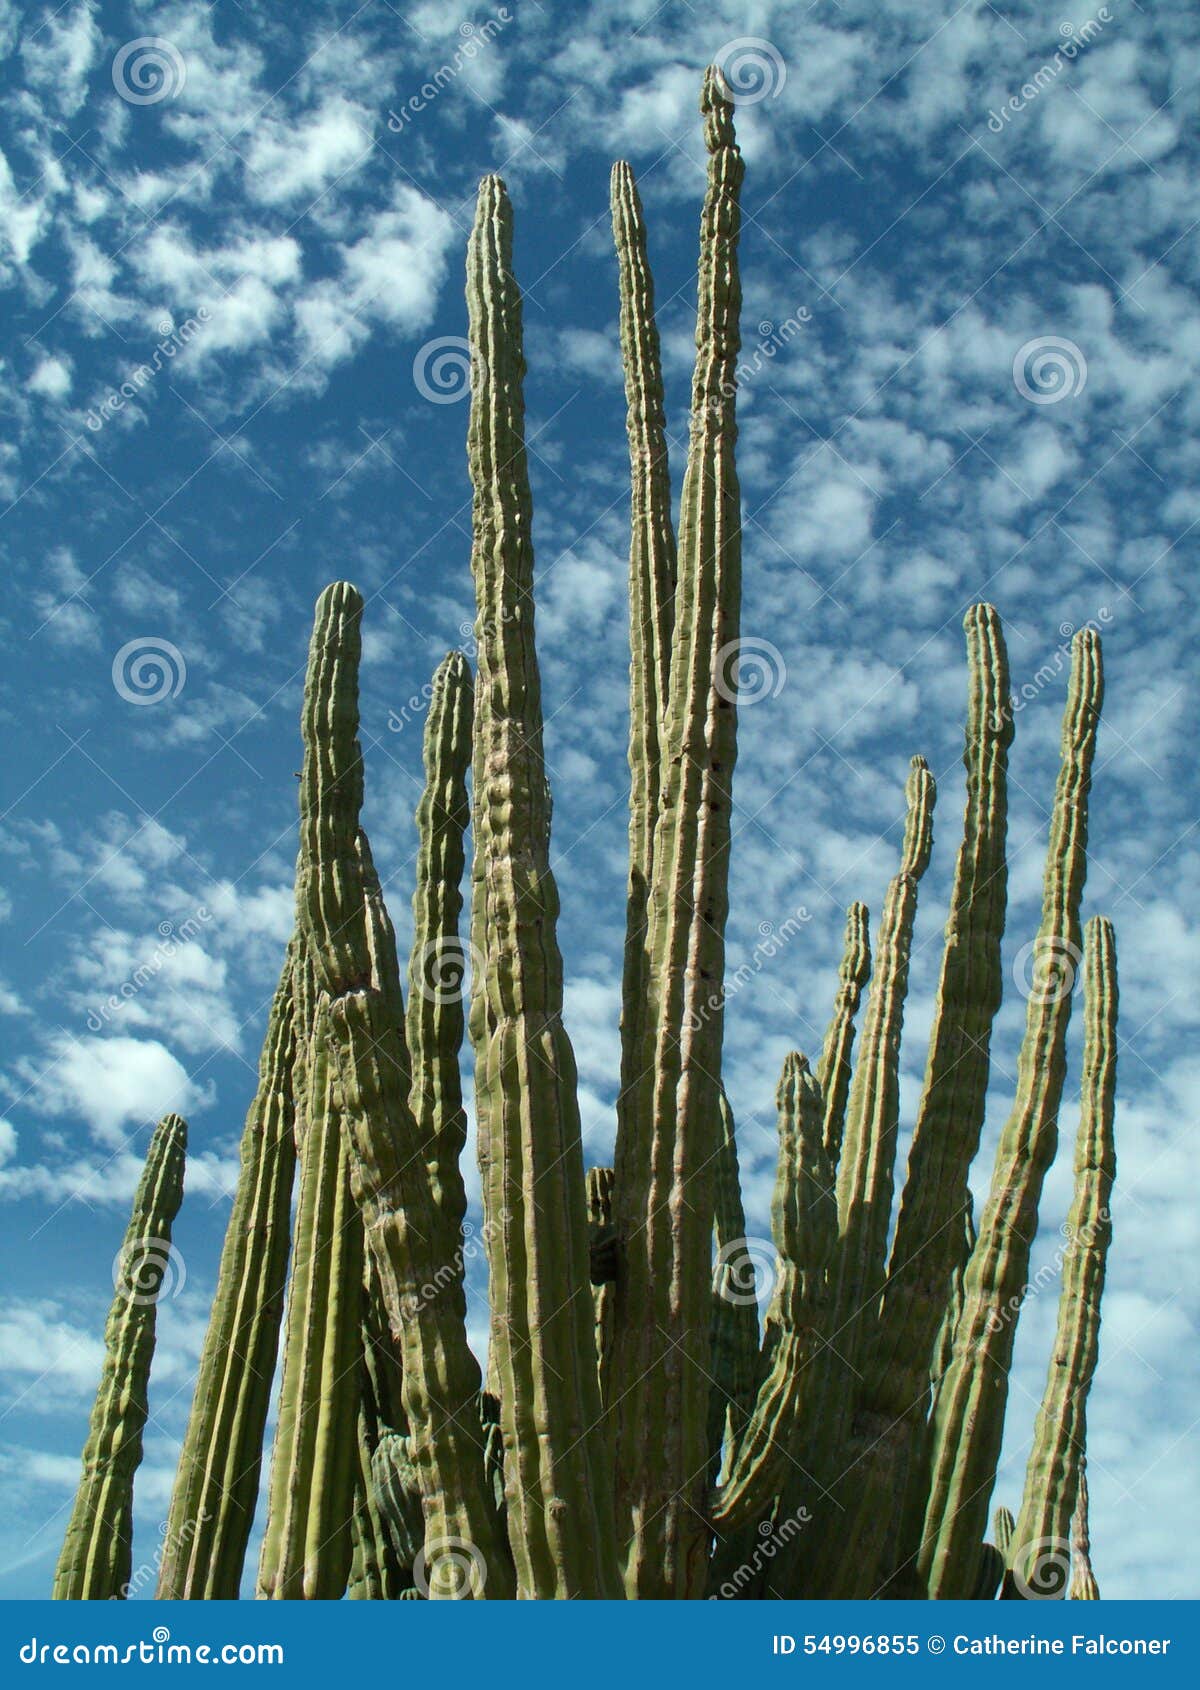 organ pipe cactus, state of baja california sur, mexico